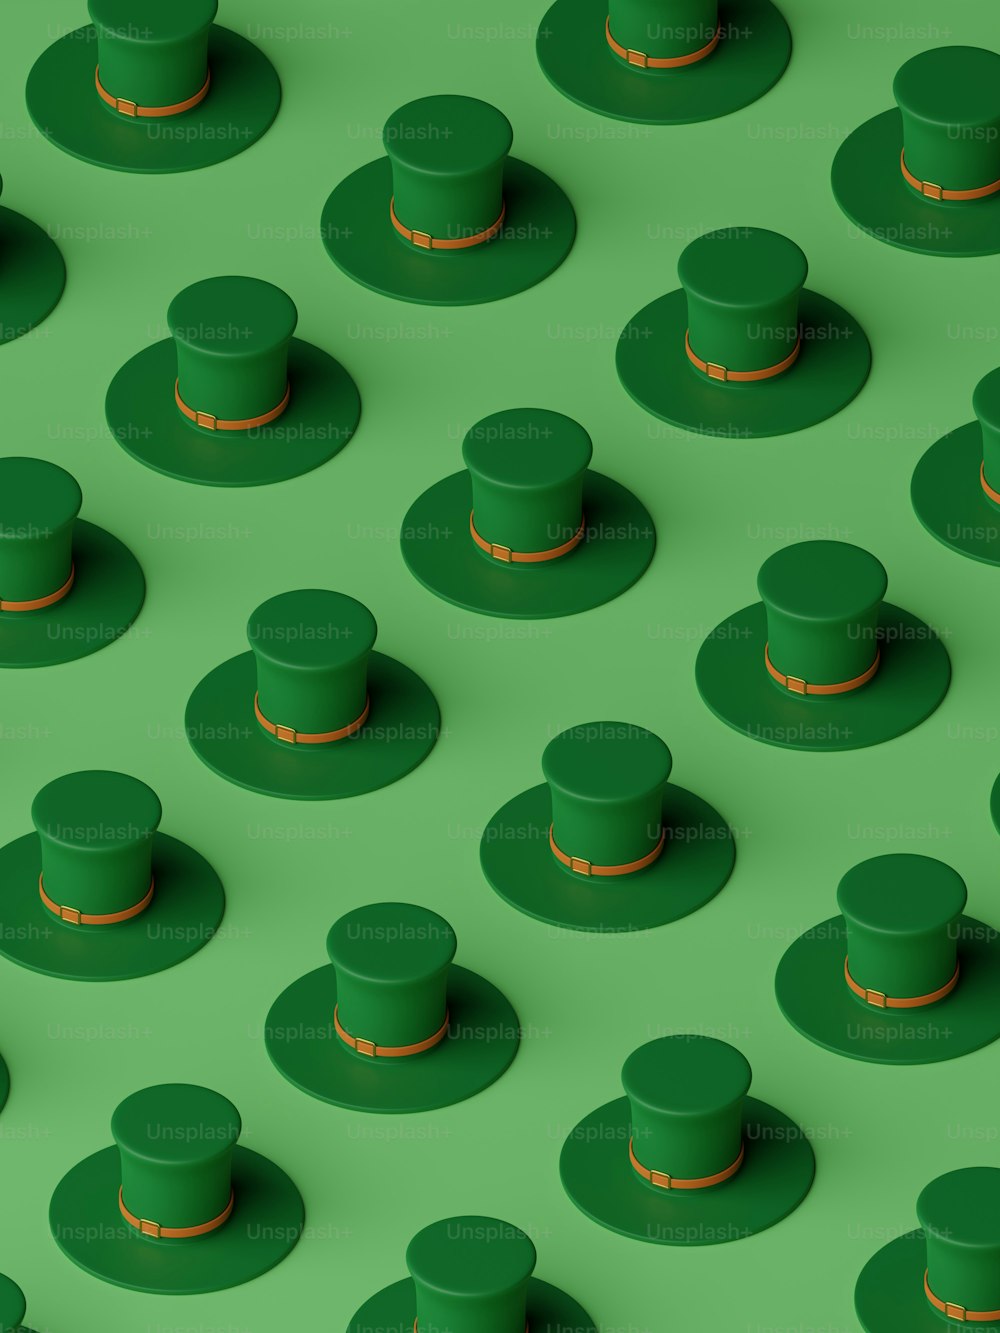 Un sacco di cappelli verdi su una superficie verde